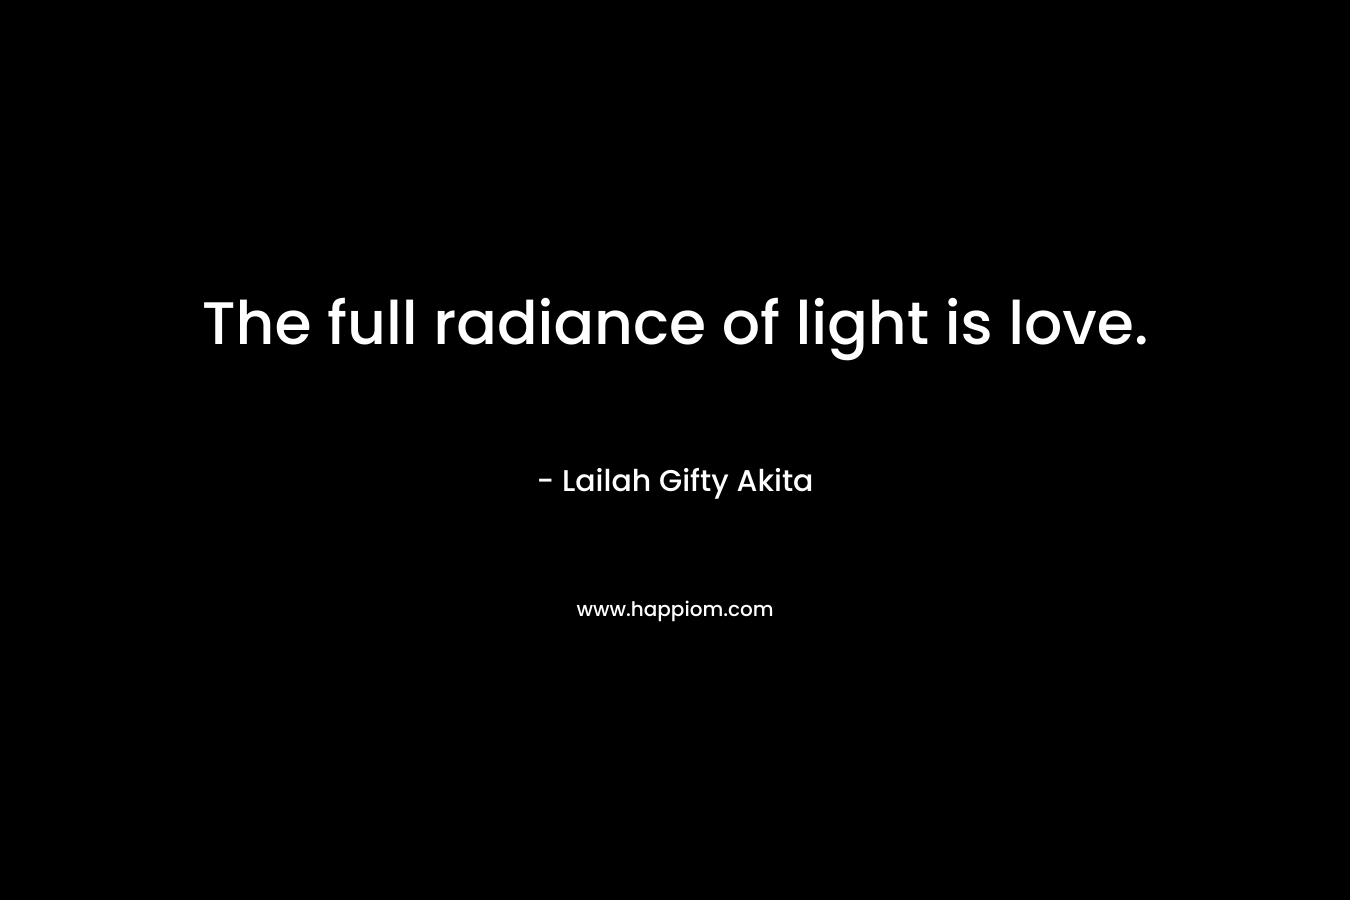 The full radiance of light is love.